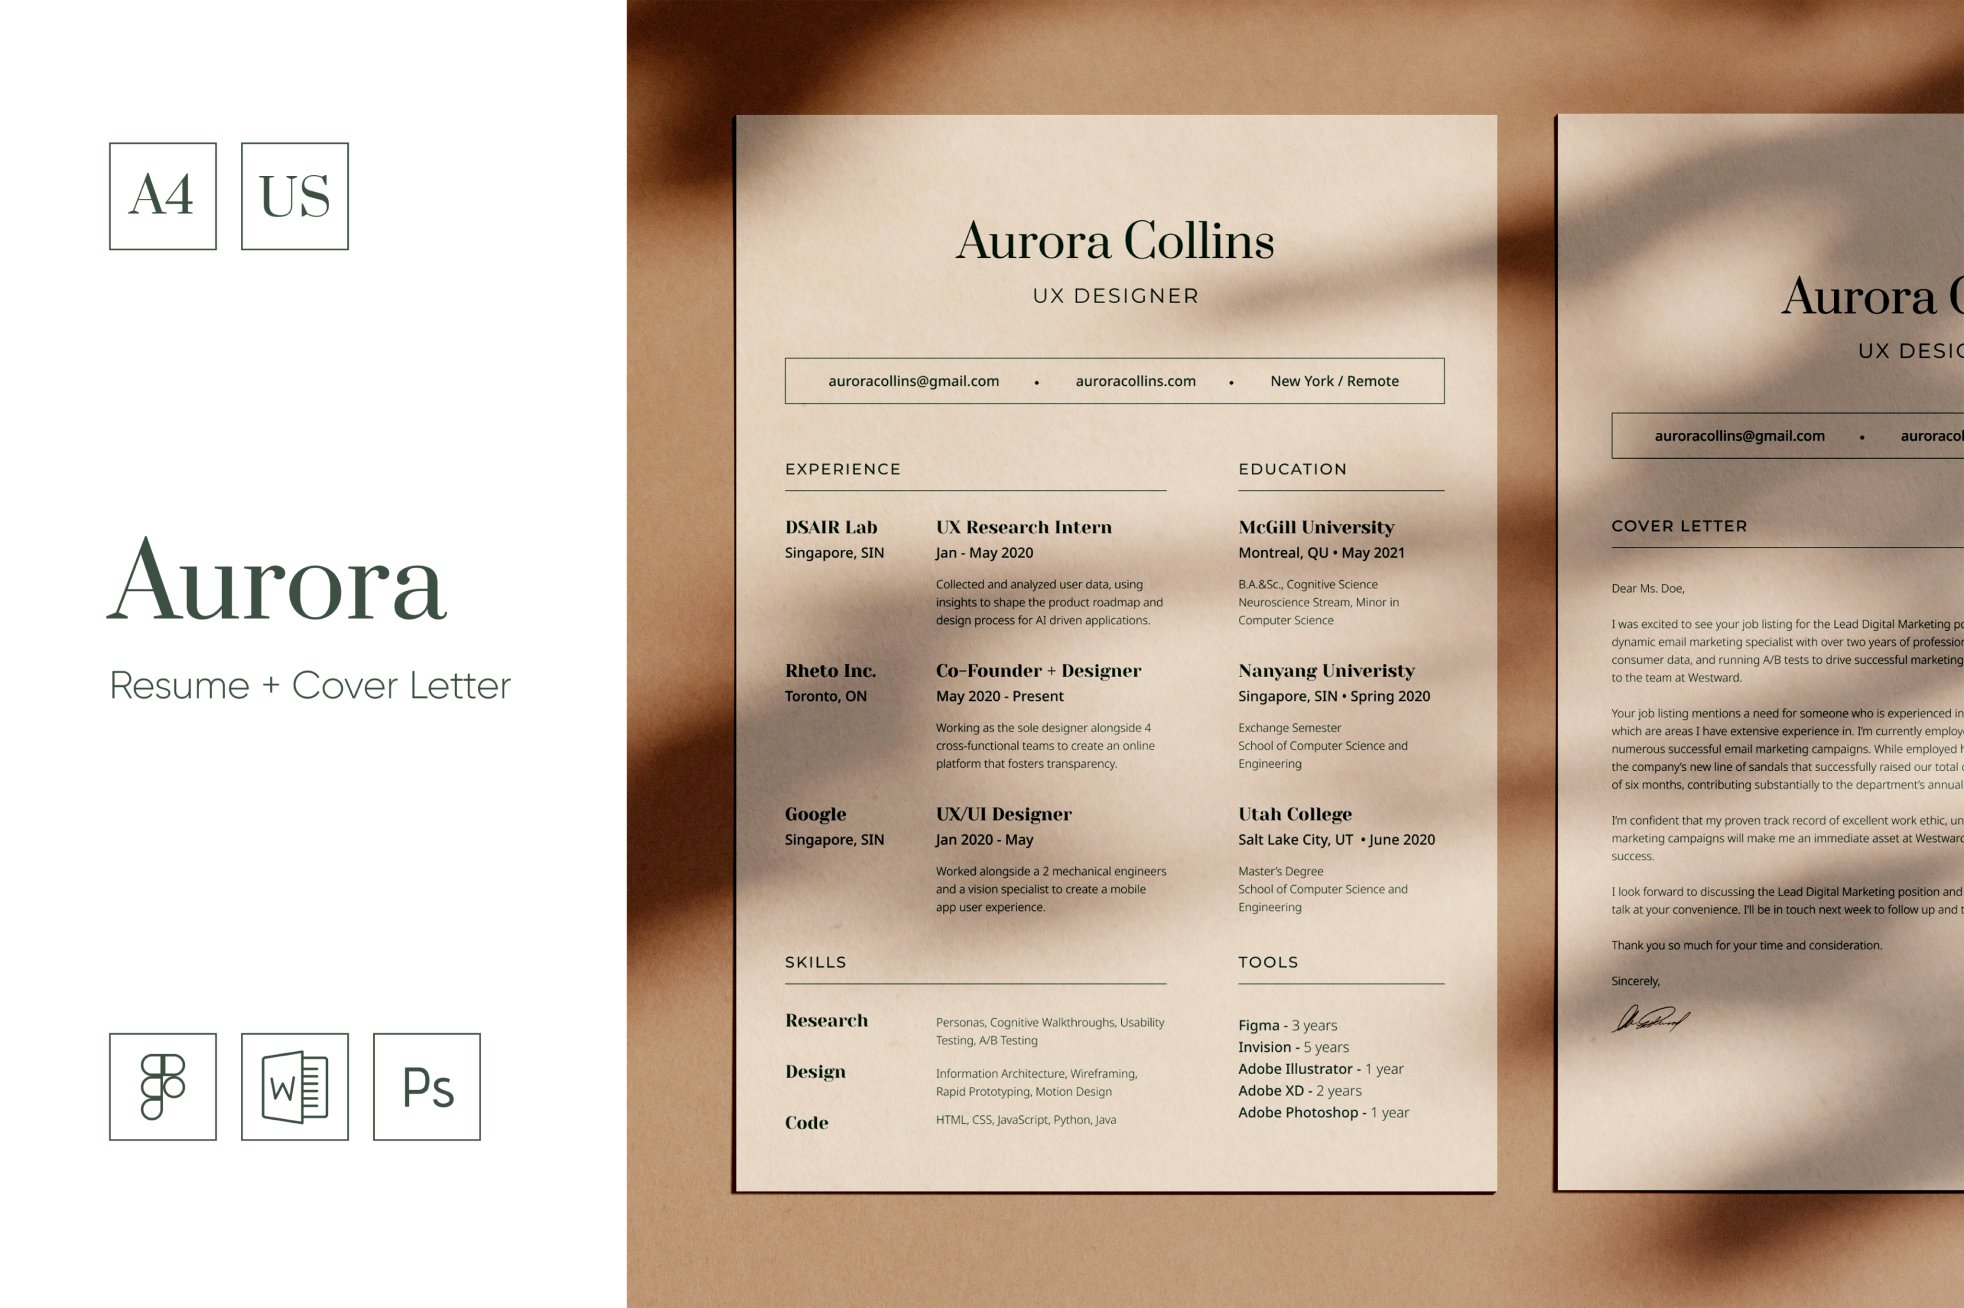 Aurora - Resume • CV • Cover Letter cover image.